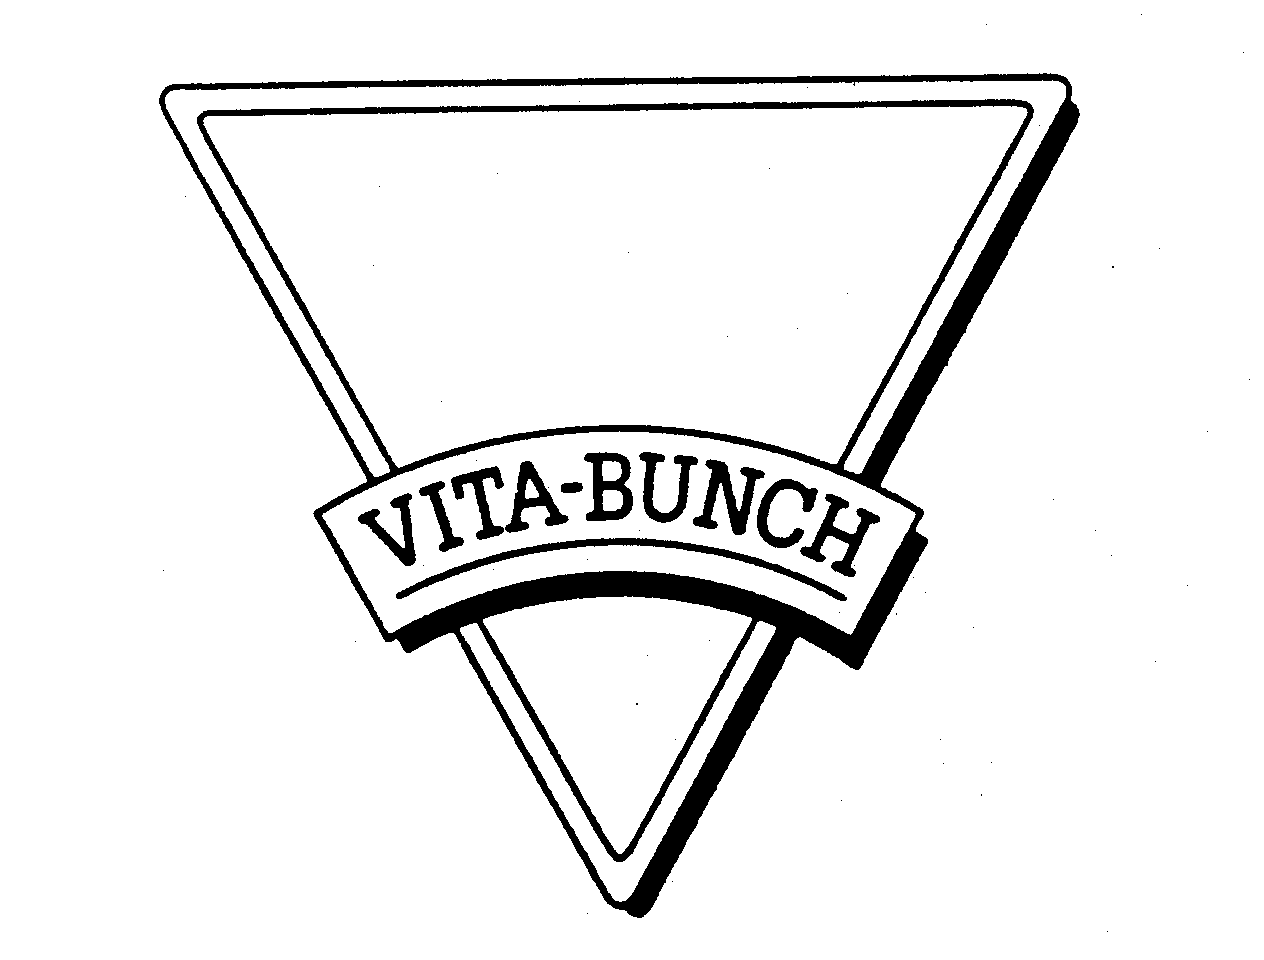  VITA-BUNCH